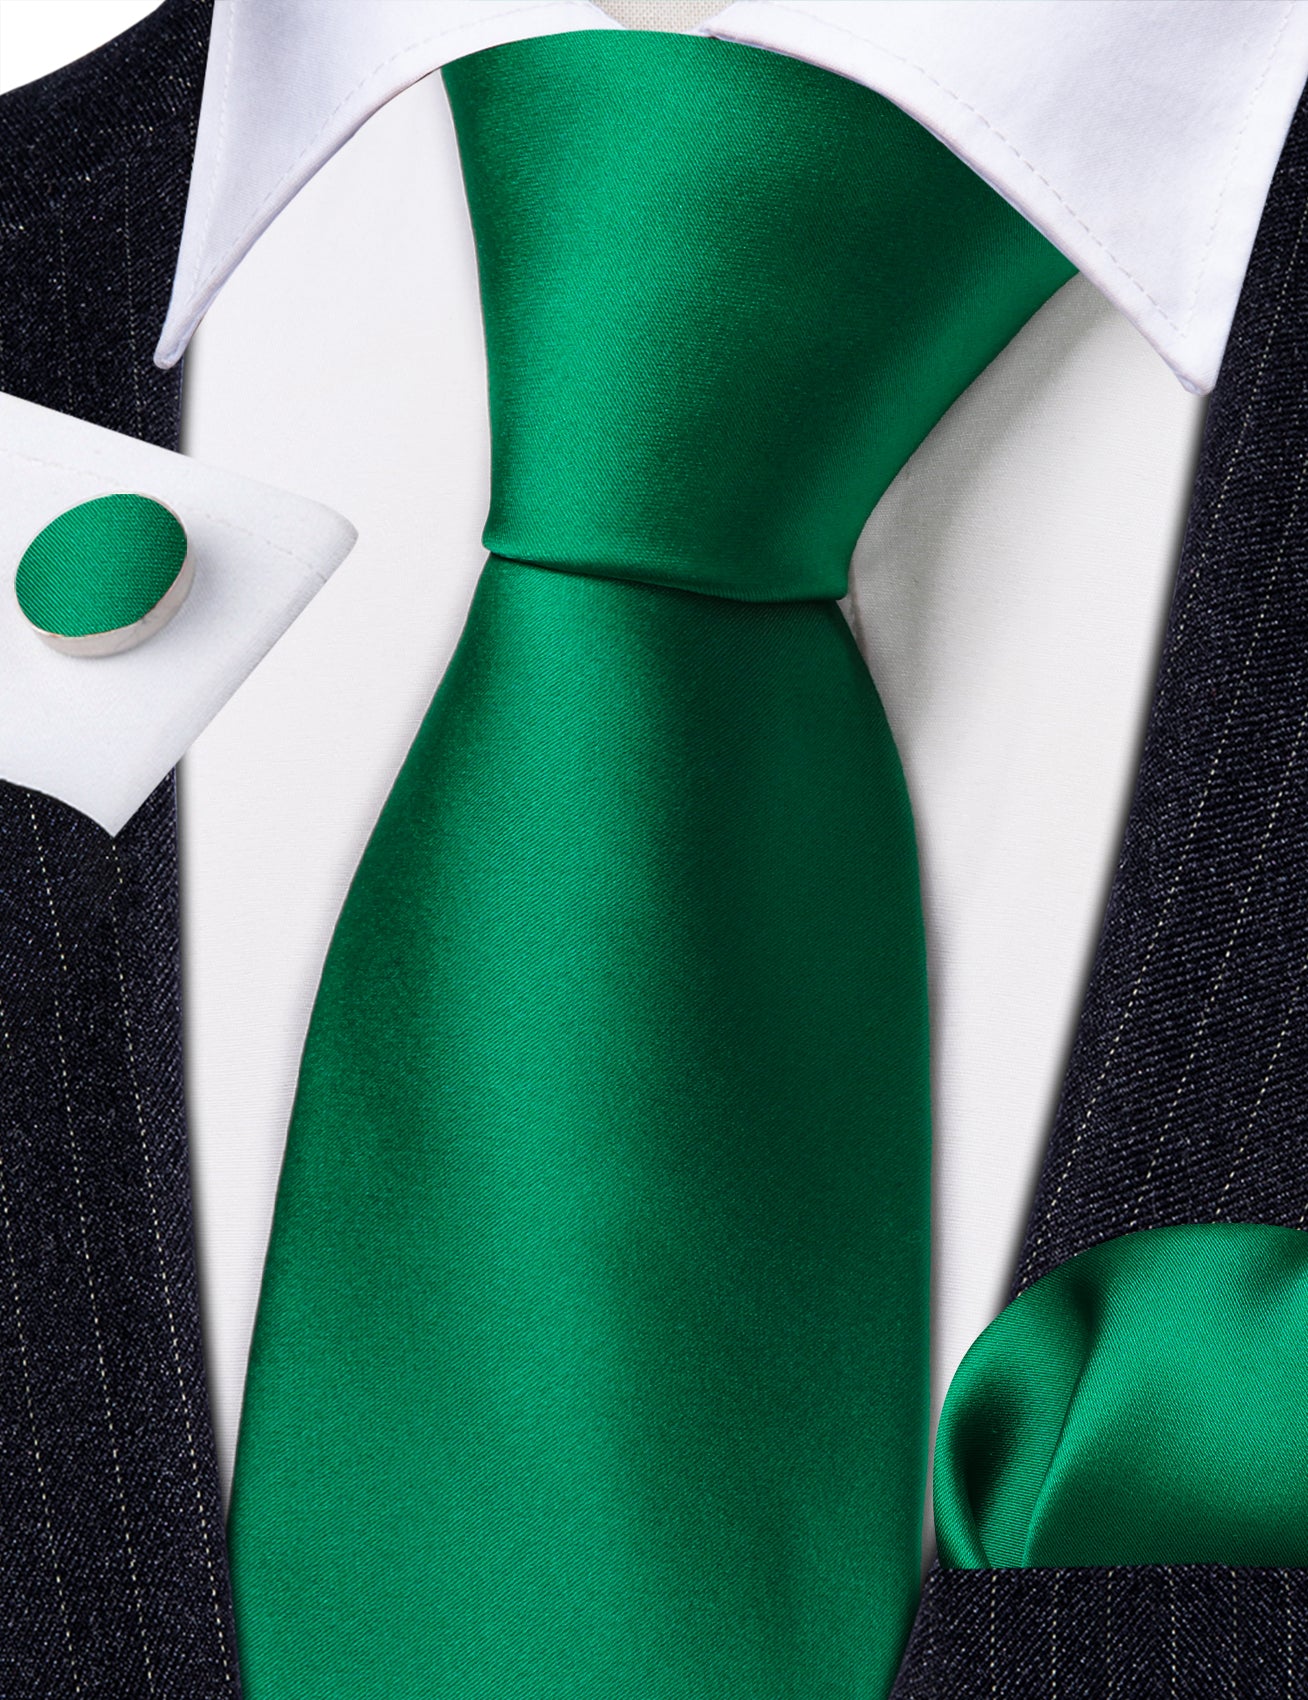 Barry Wang Emerald Green Solid Silk Tie Handkerchief Cufflinks Set For Men